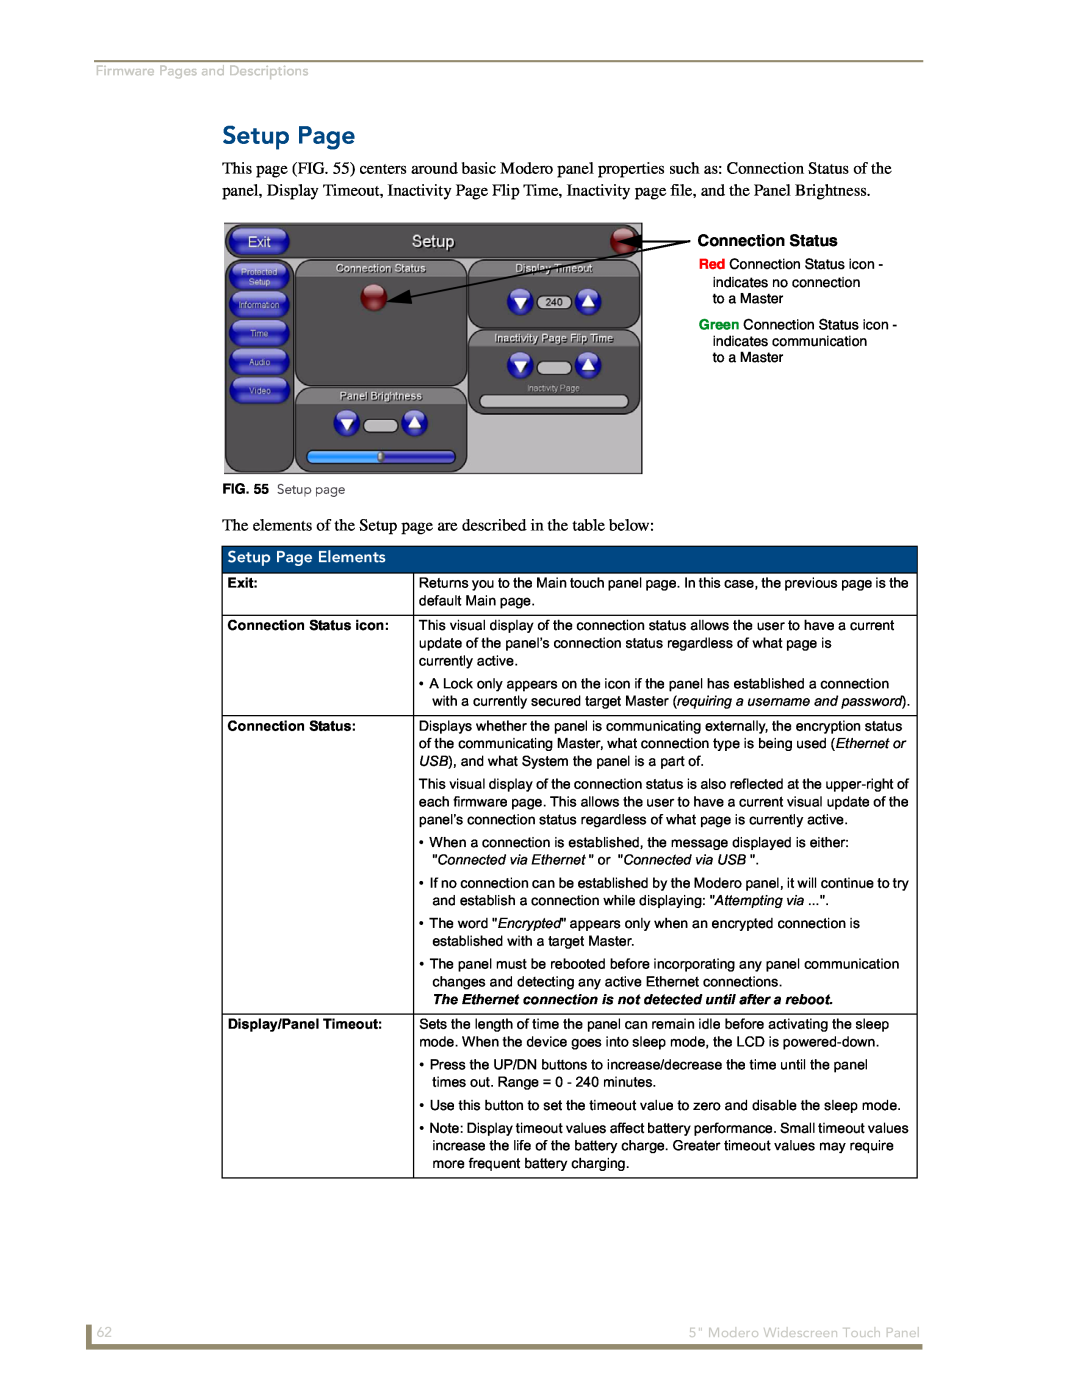 AMX NXD-CV5 manual Setup Page Elements, Firmware Pages and Descriptions, Exit, Connection Status icon 